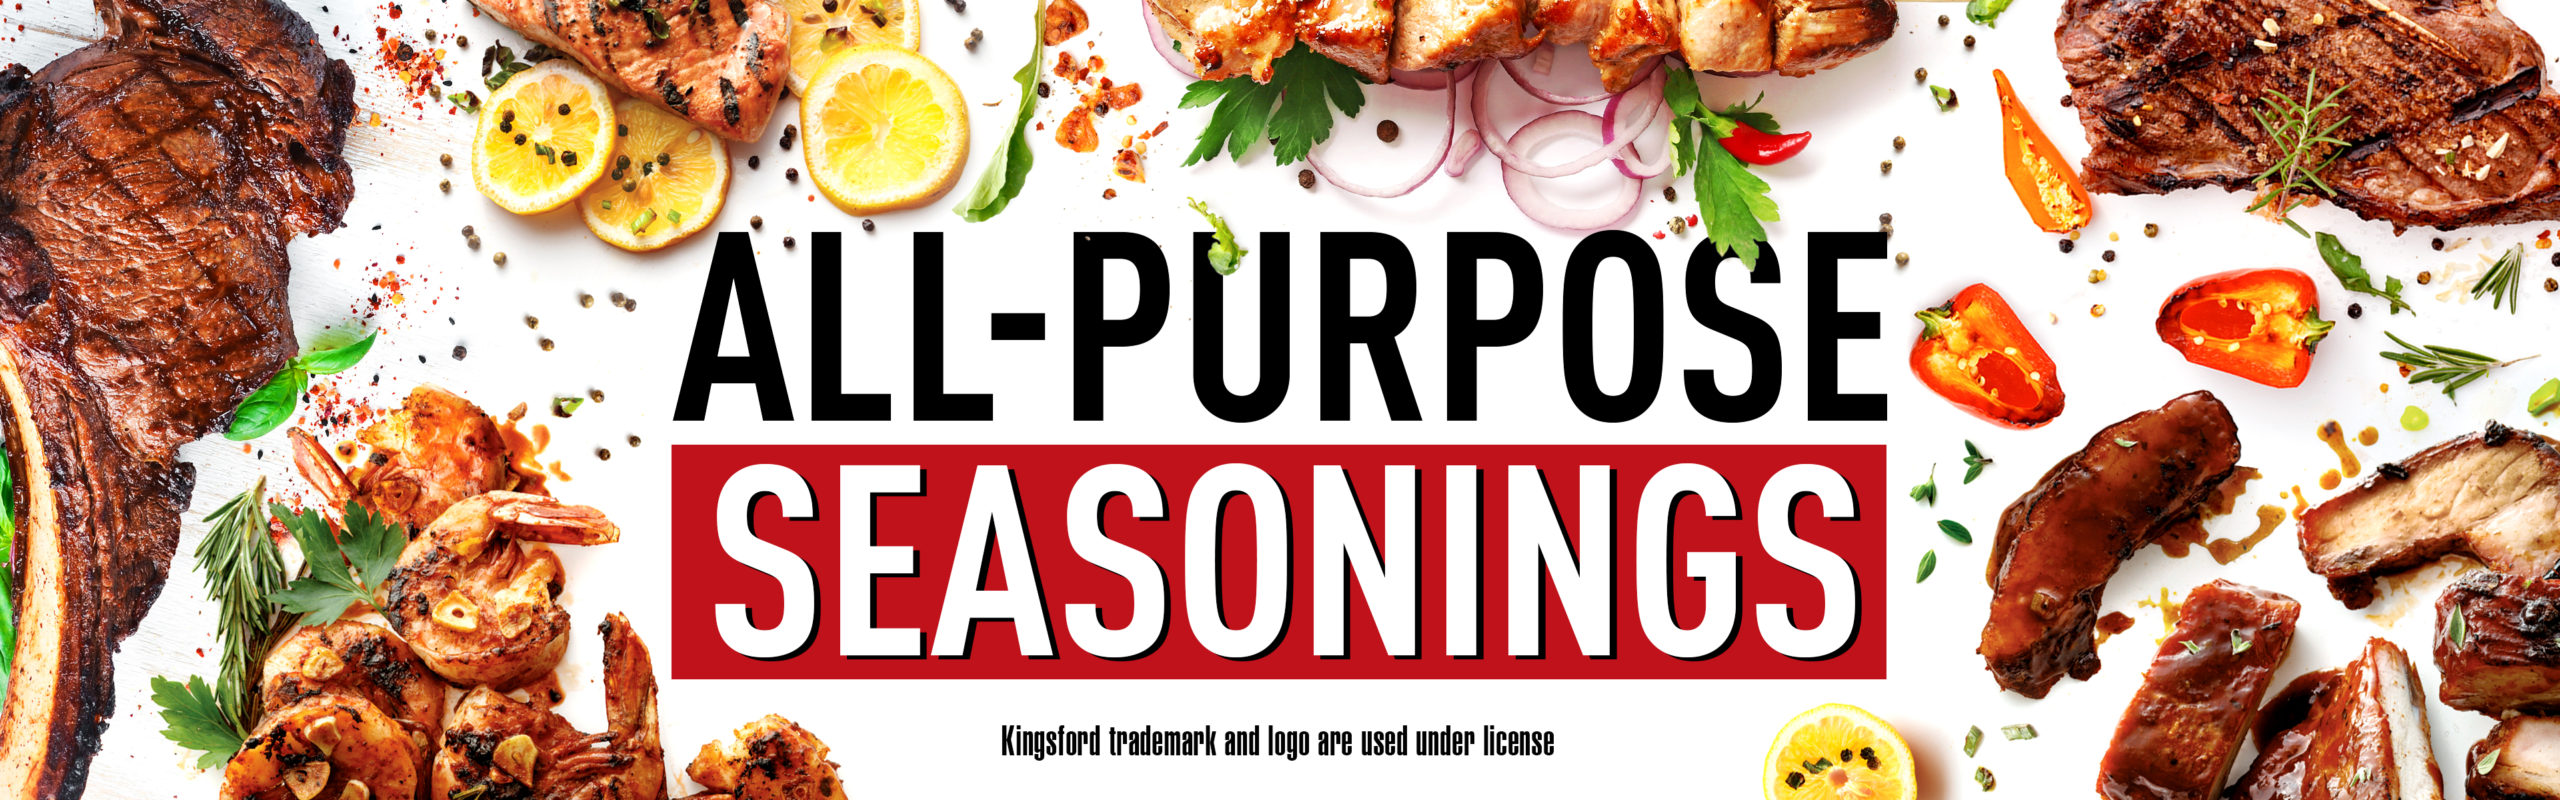 Kingsford All-Purpose Seasoning, Garlic & Herbs, Rustic Tuscan Style - 5.5 oz